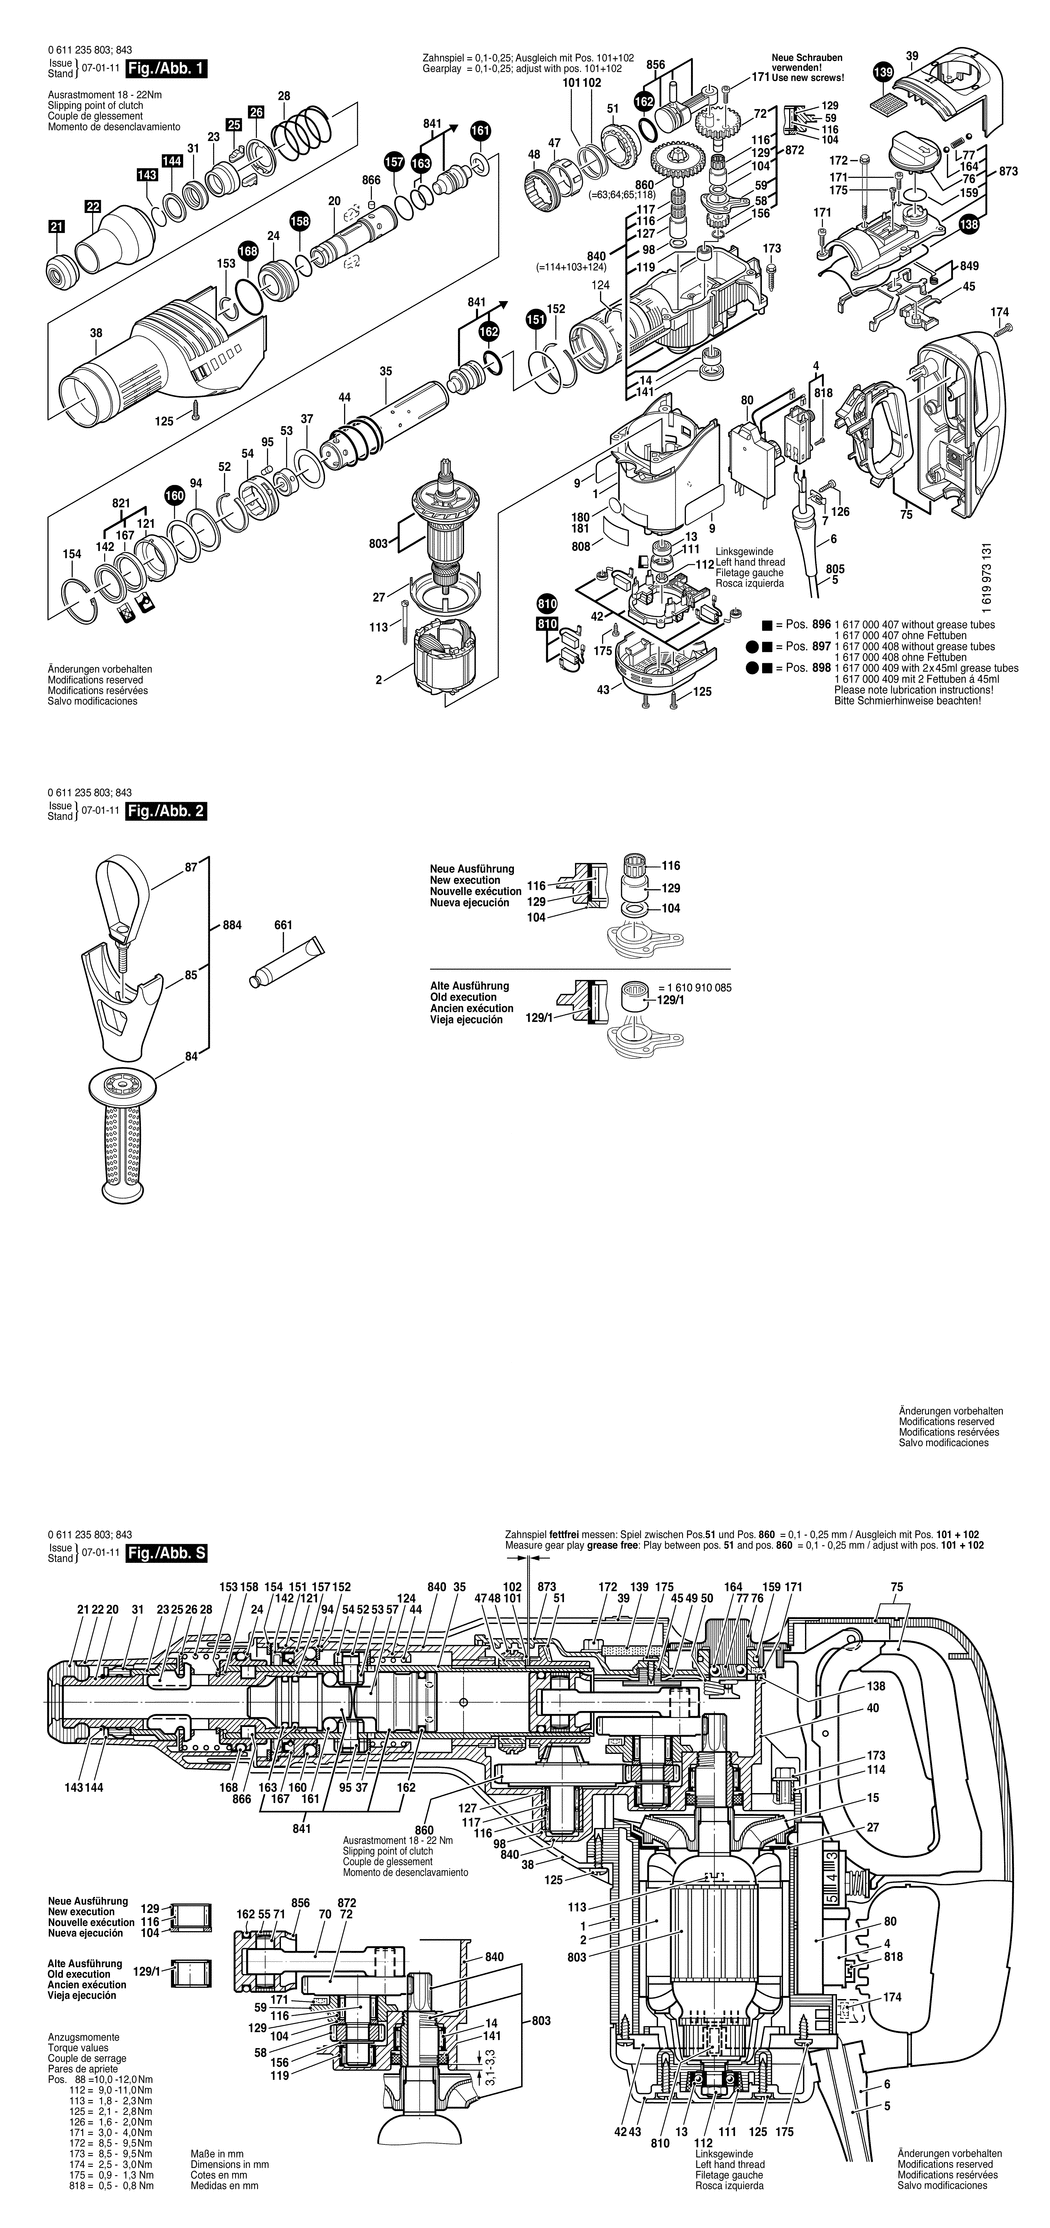 Bosch GBH 7-45 DE / 0611235841 / GB 110 Volt Spare Parts